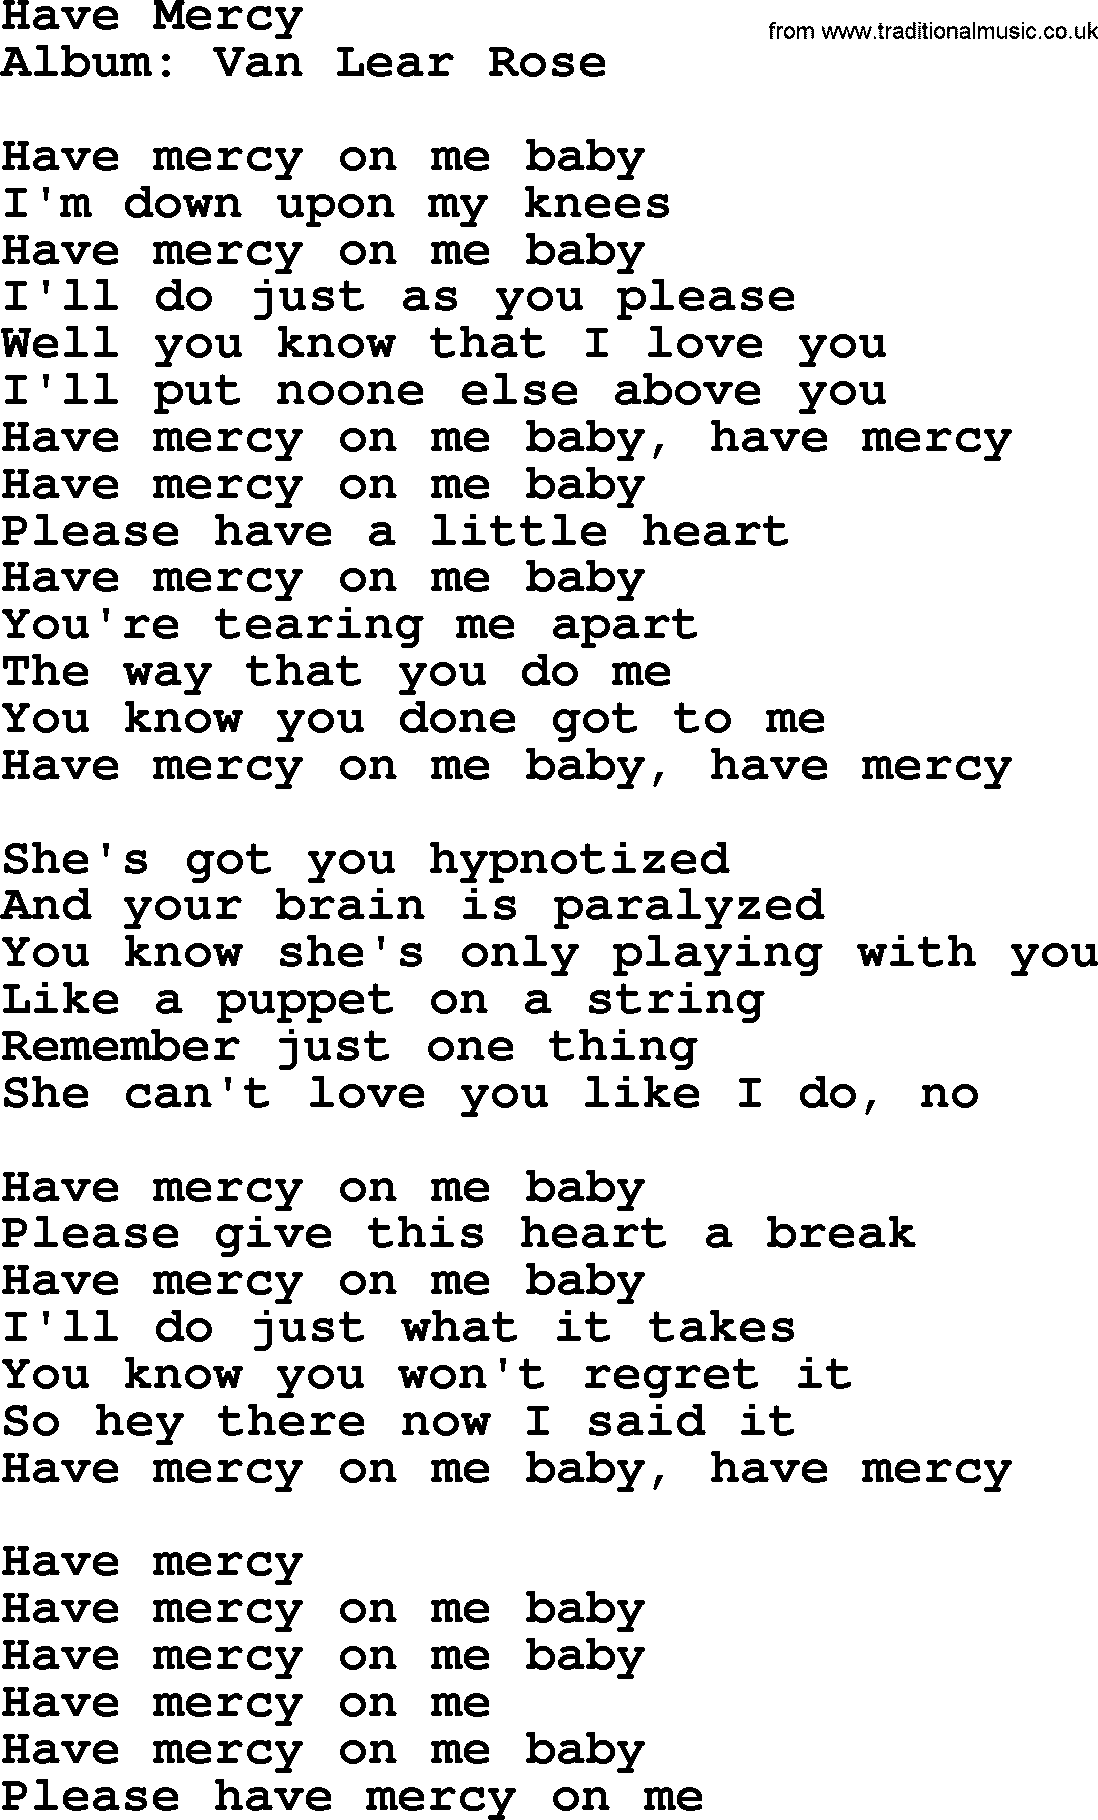 Loretta Lynn song: Have Mercy lyrics